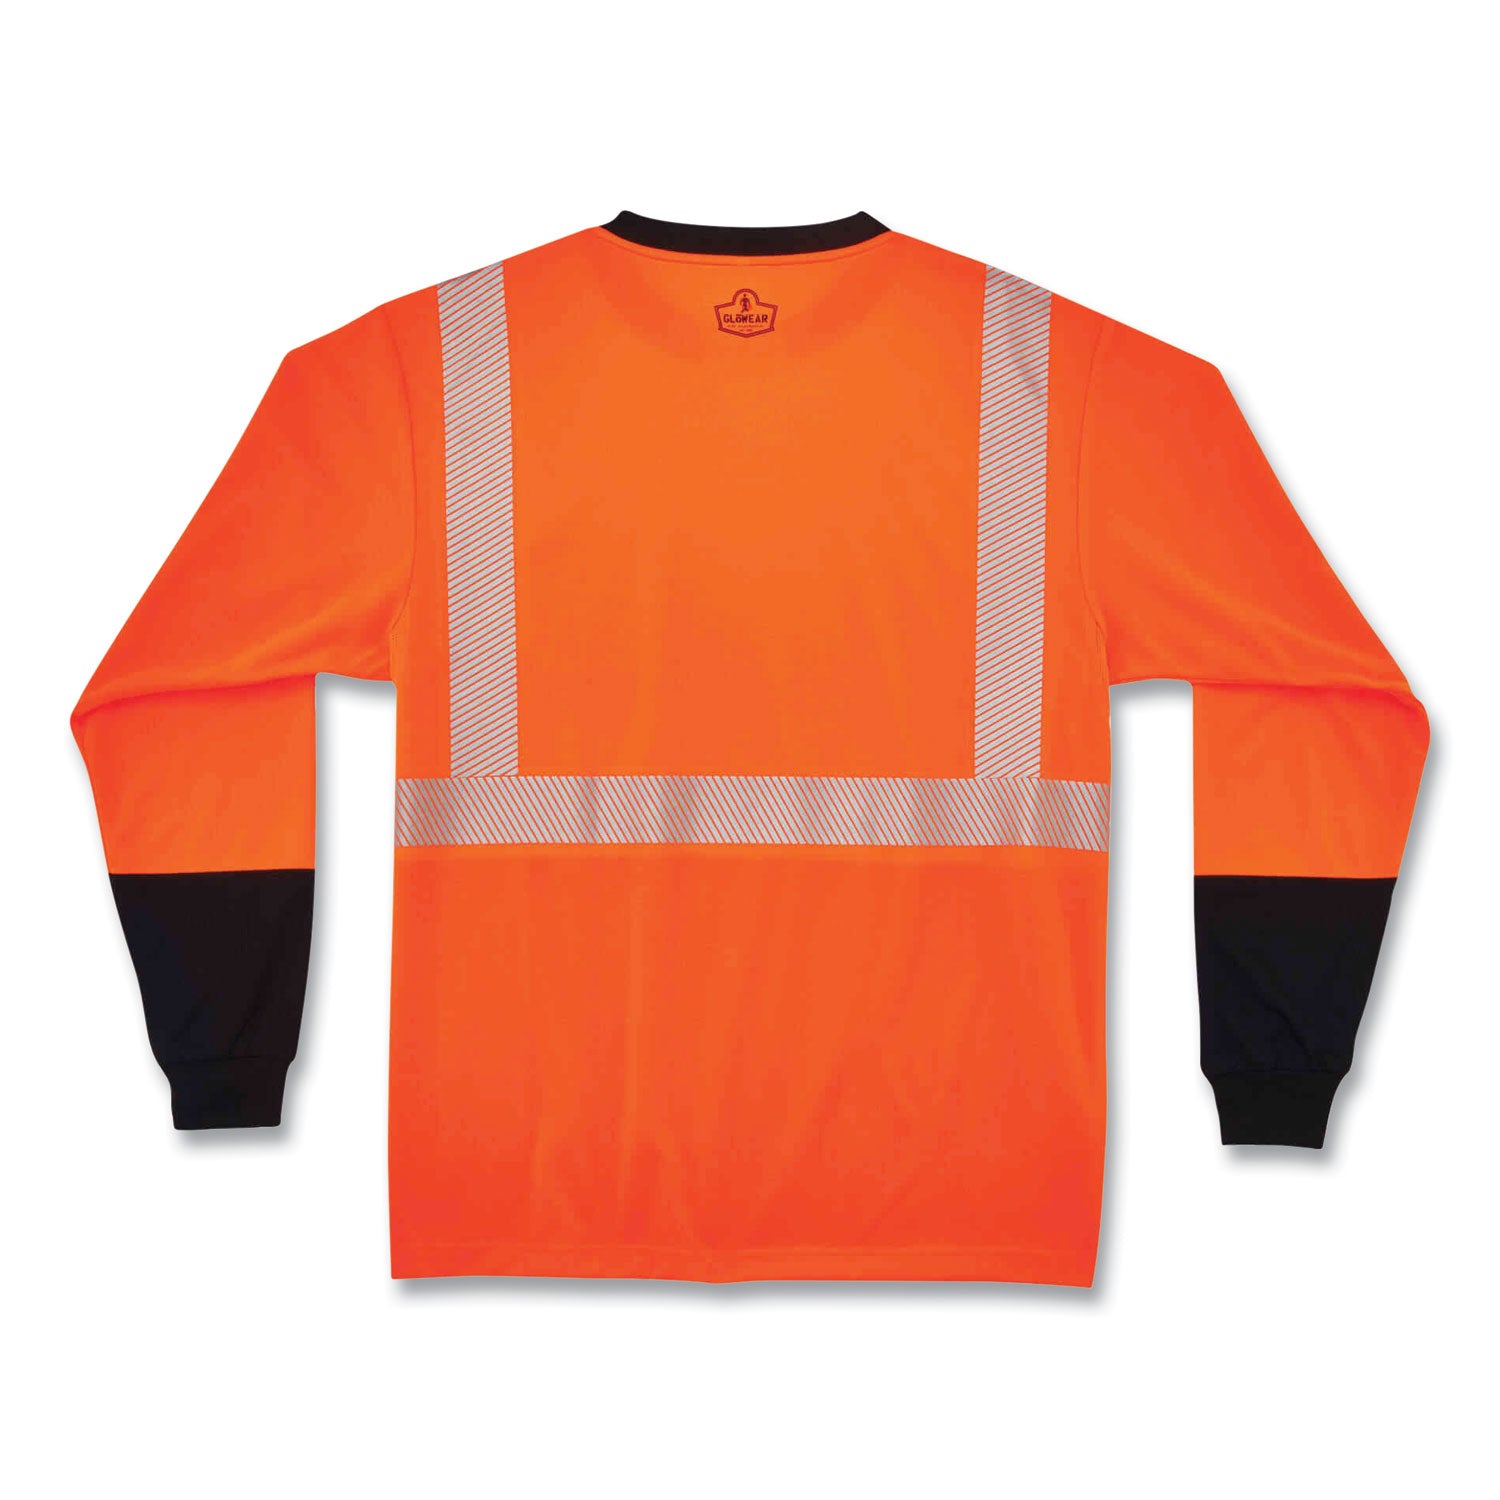 glowear-8281bk-class-2-long-sleeve-shirt-with-black-bottom-polyester-medium-orange-ships-in-1-3-business-days_ego22683 - 3